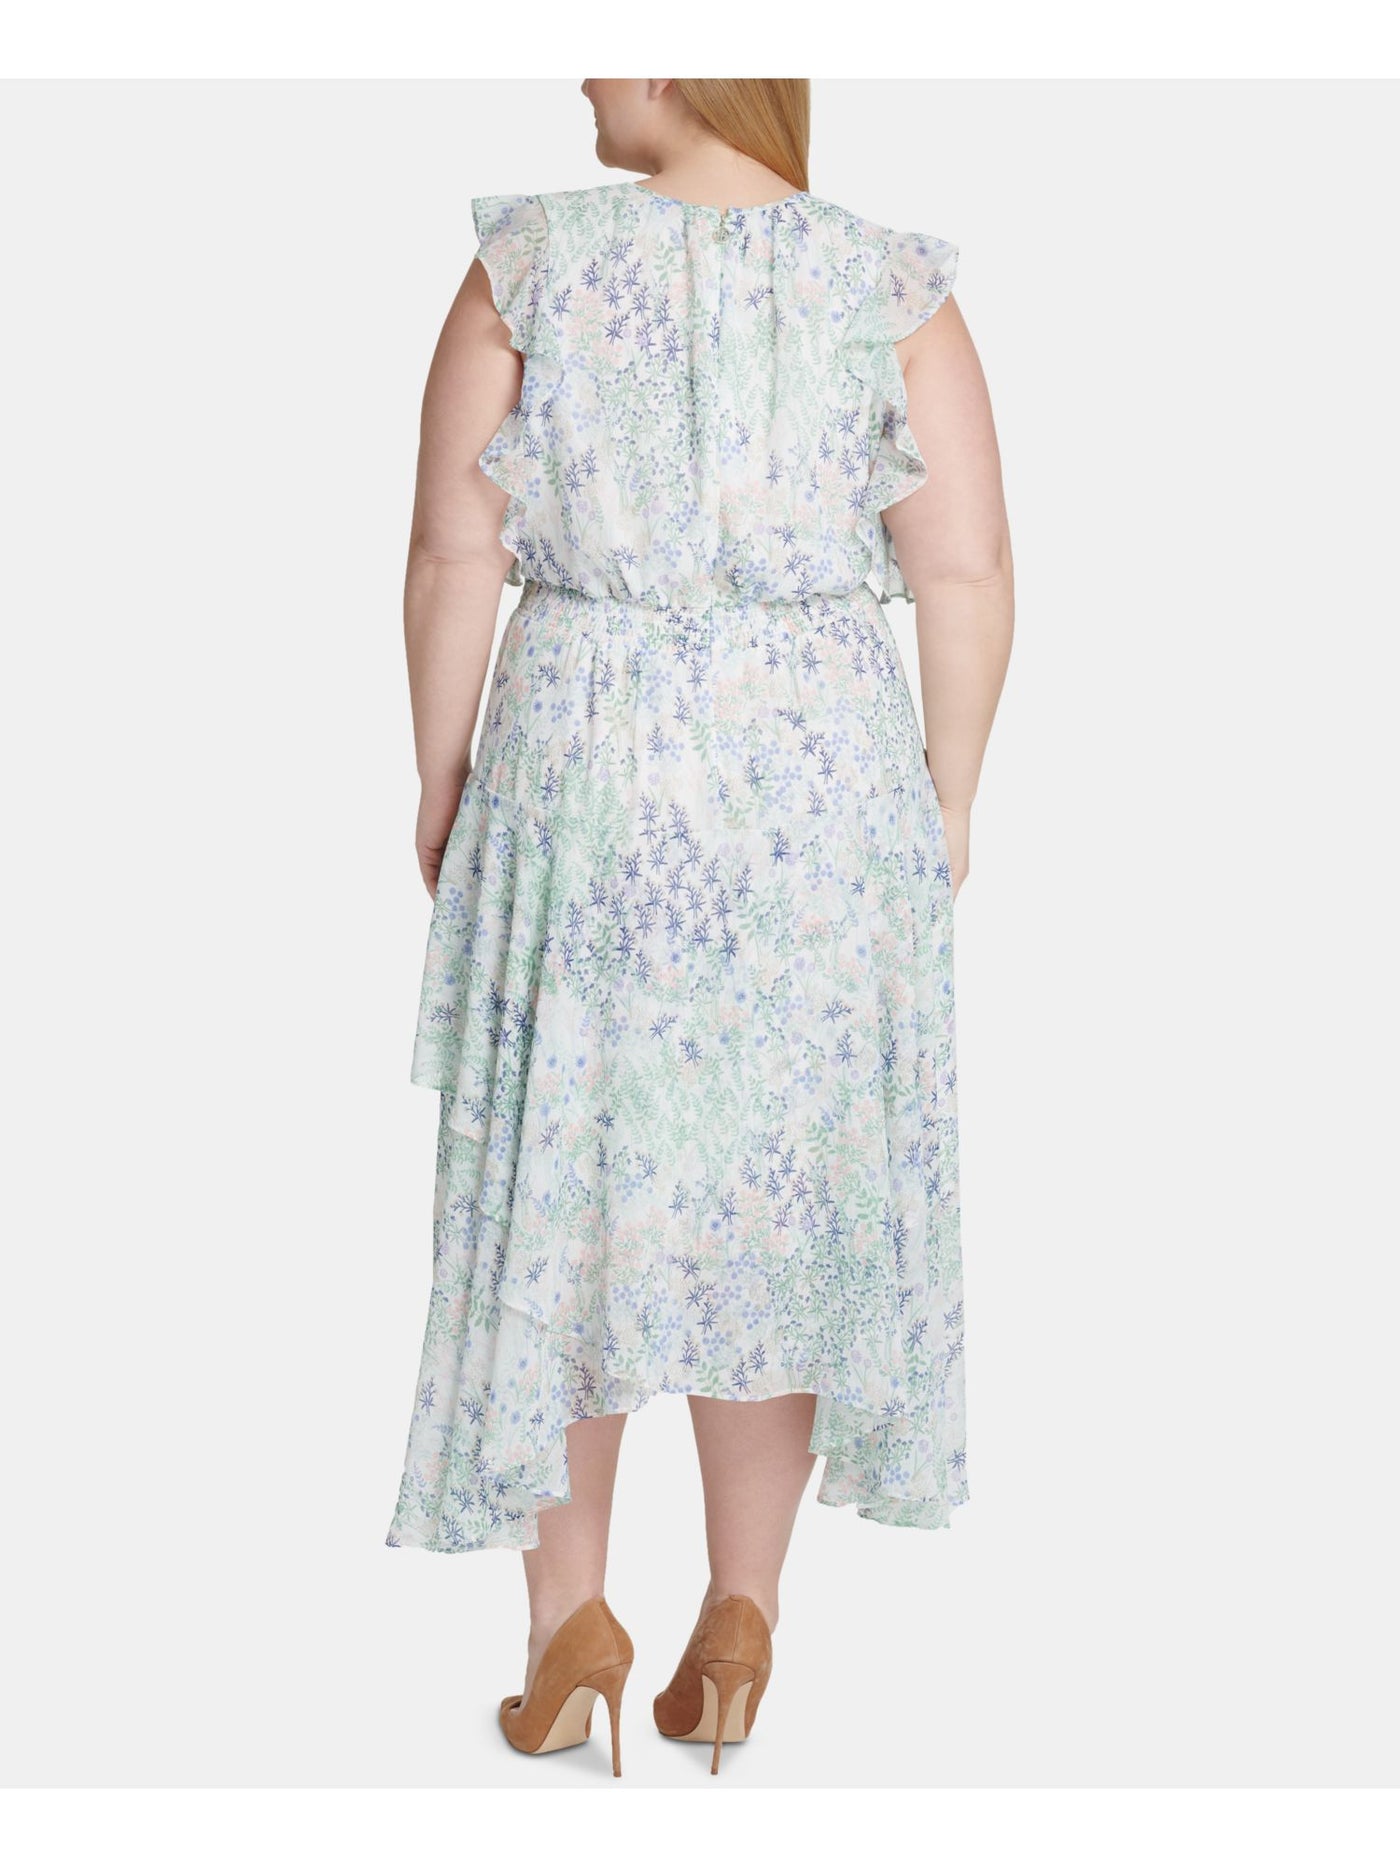 TOMMY HILFIGER Womens Ivory Ruched Printed Jewel Neck Tea-Length Sheath Dress Plus 22W